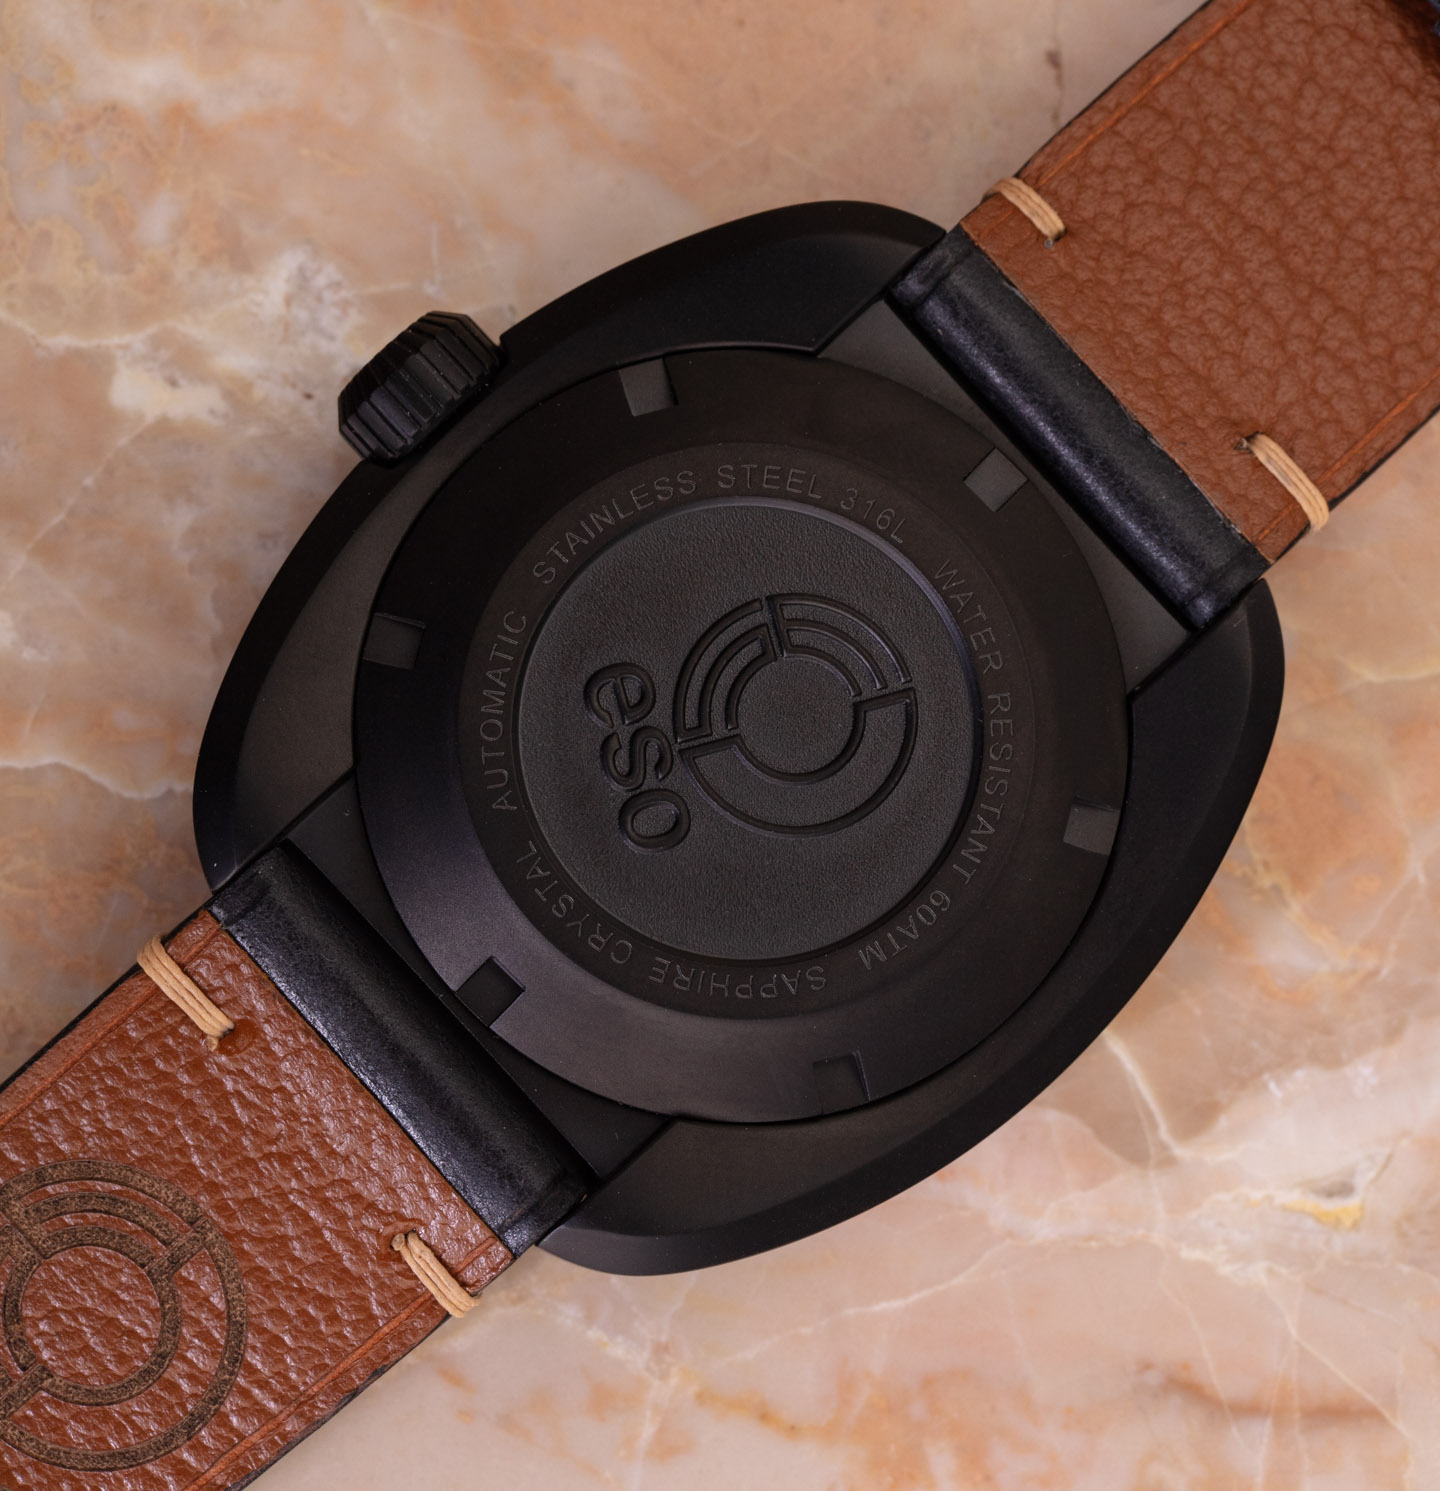 Eso Bathyal Oscuro迷人而独特的设计的手表